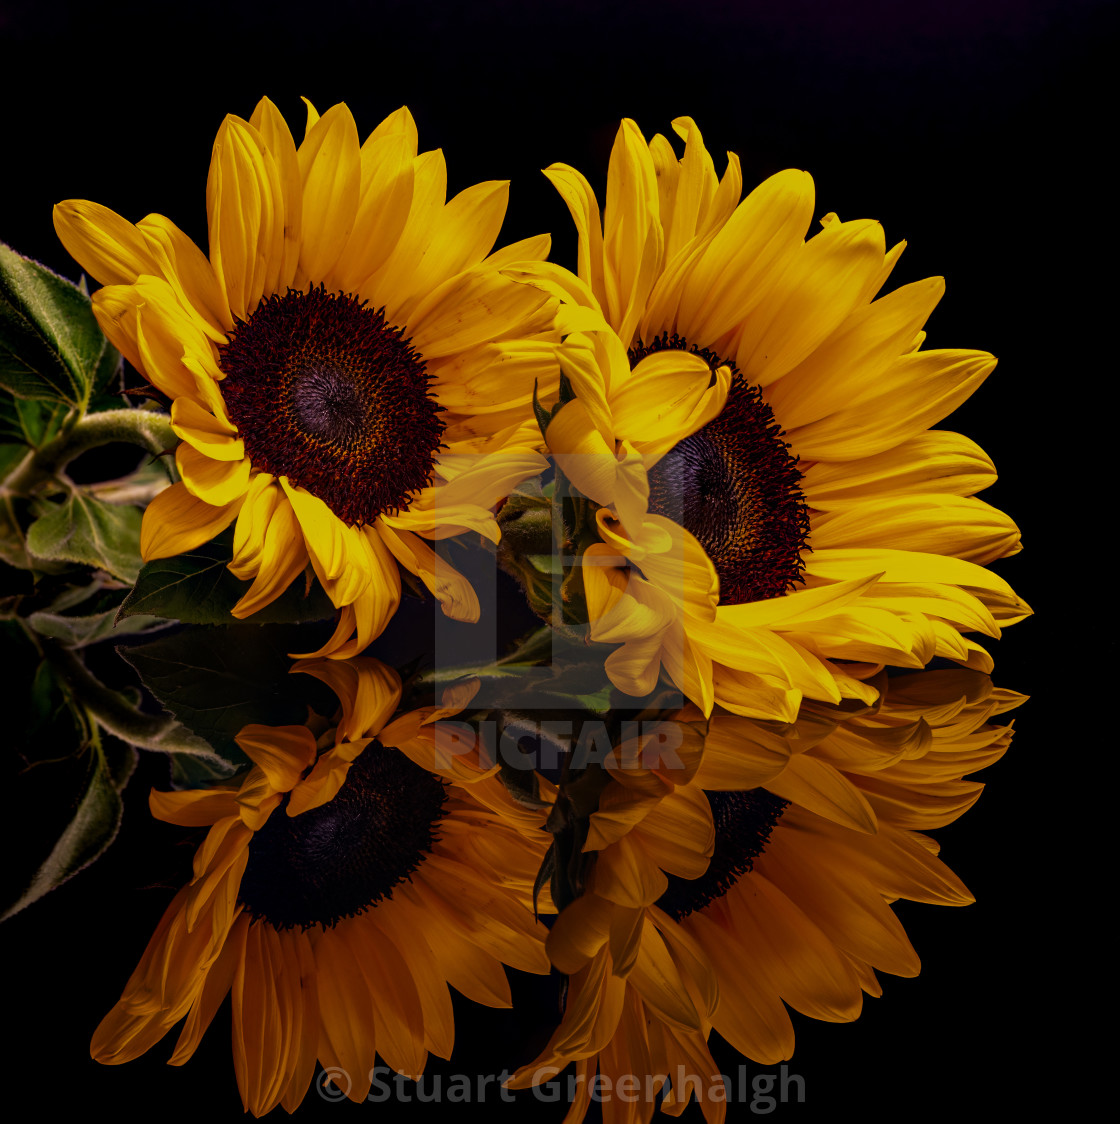 "Sunflower reflection" stock image